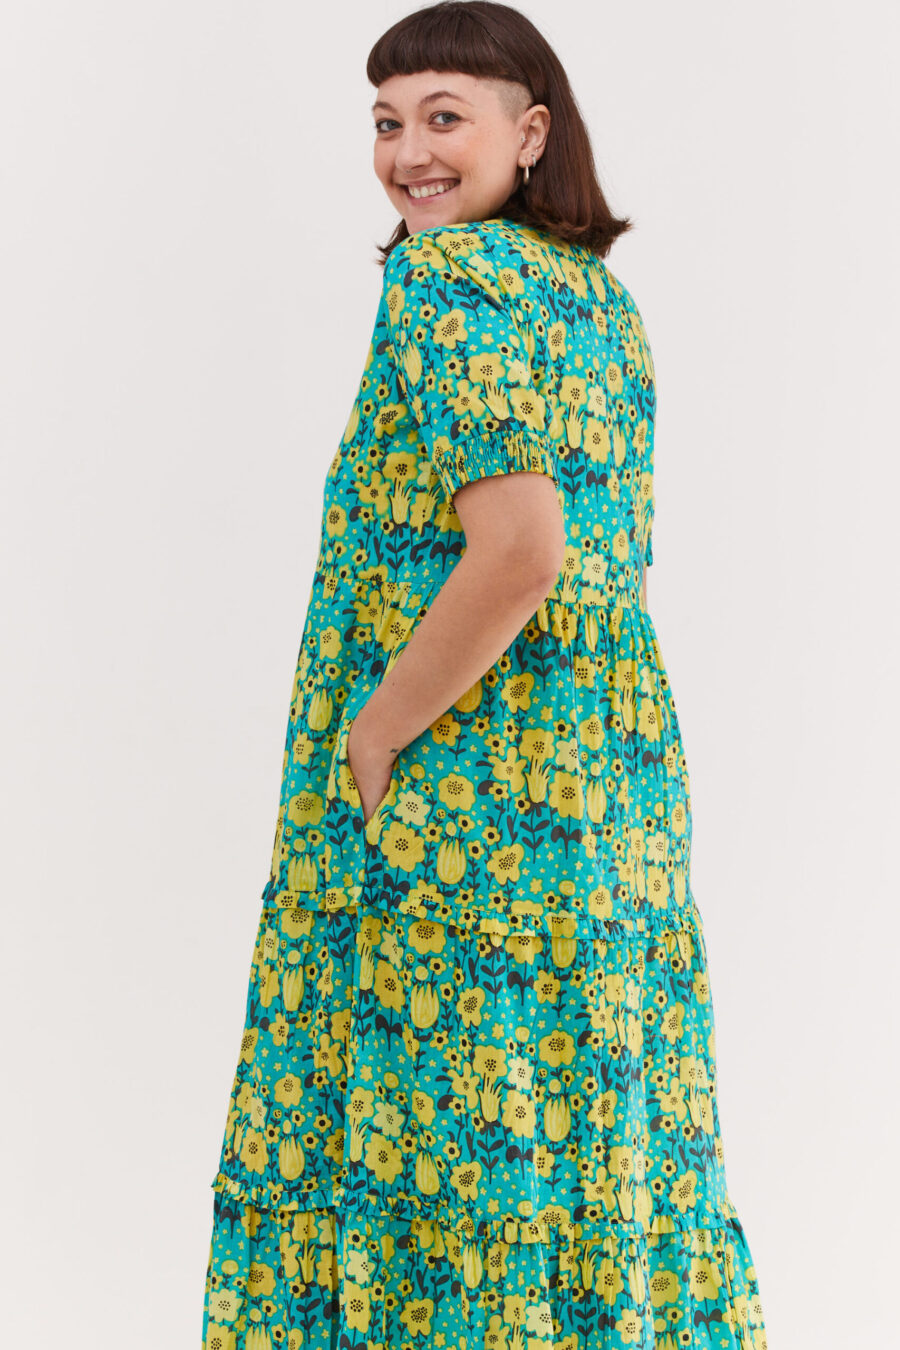 Efrat dress | Uniquely designed maxi dress - Optimism print, tourquise dress with yellow flowers print. by comfort zone boutique